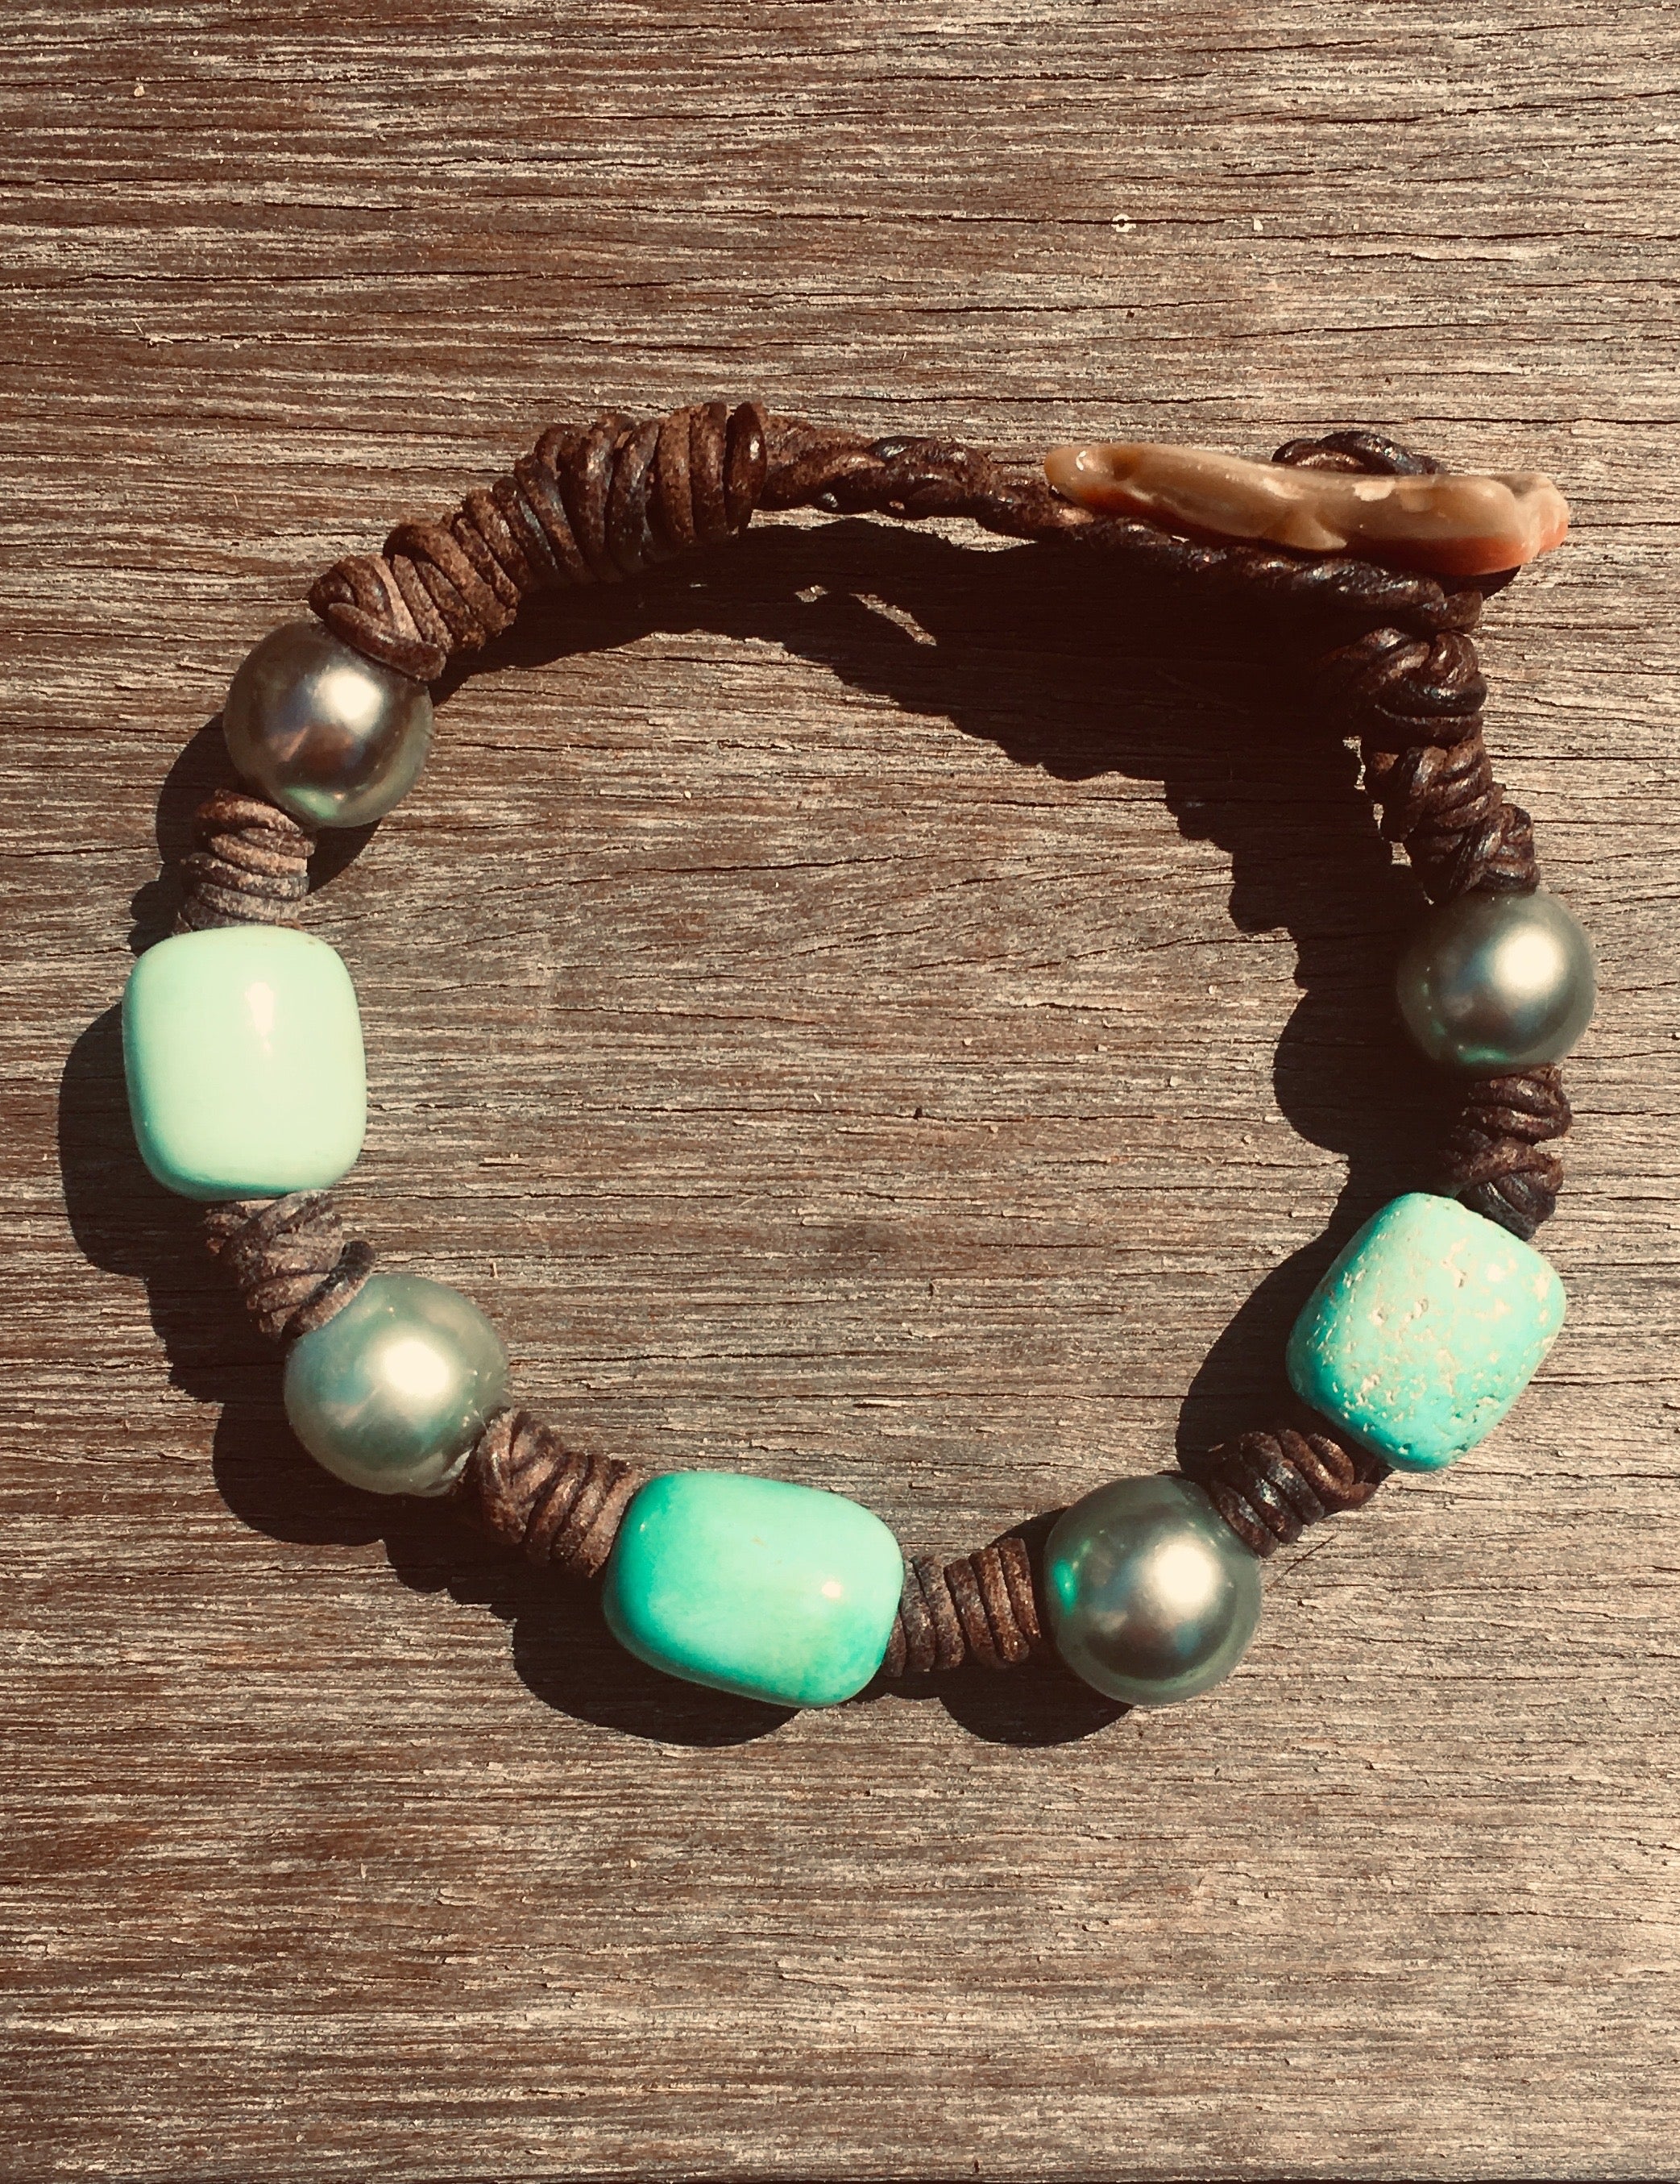 Tahitian Pearls & Turquoise Leather Bracelet